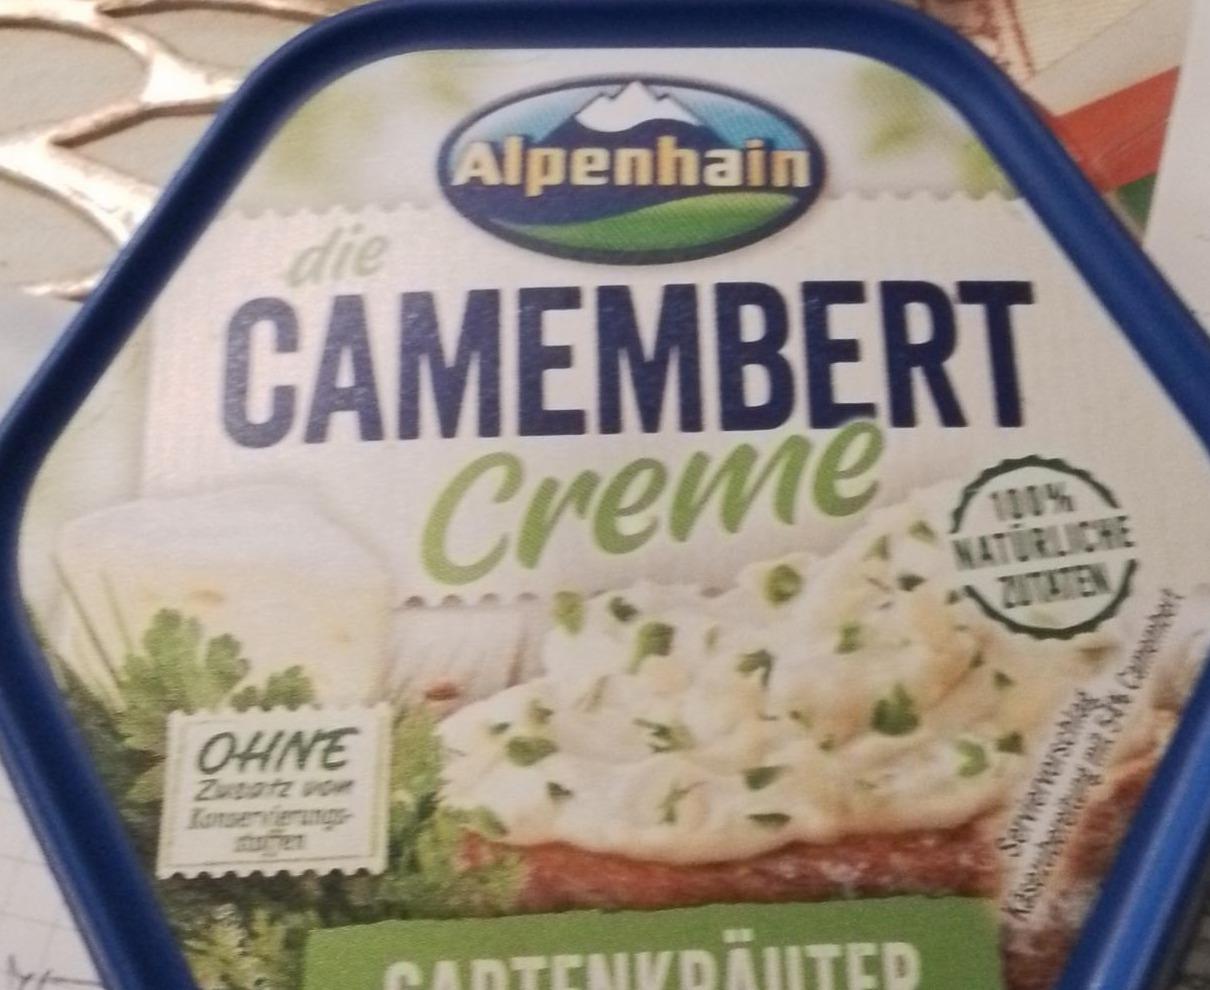 Zdjęcia - Camembert Creme Gartenkräuten Alpenhain